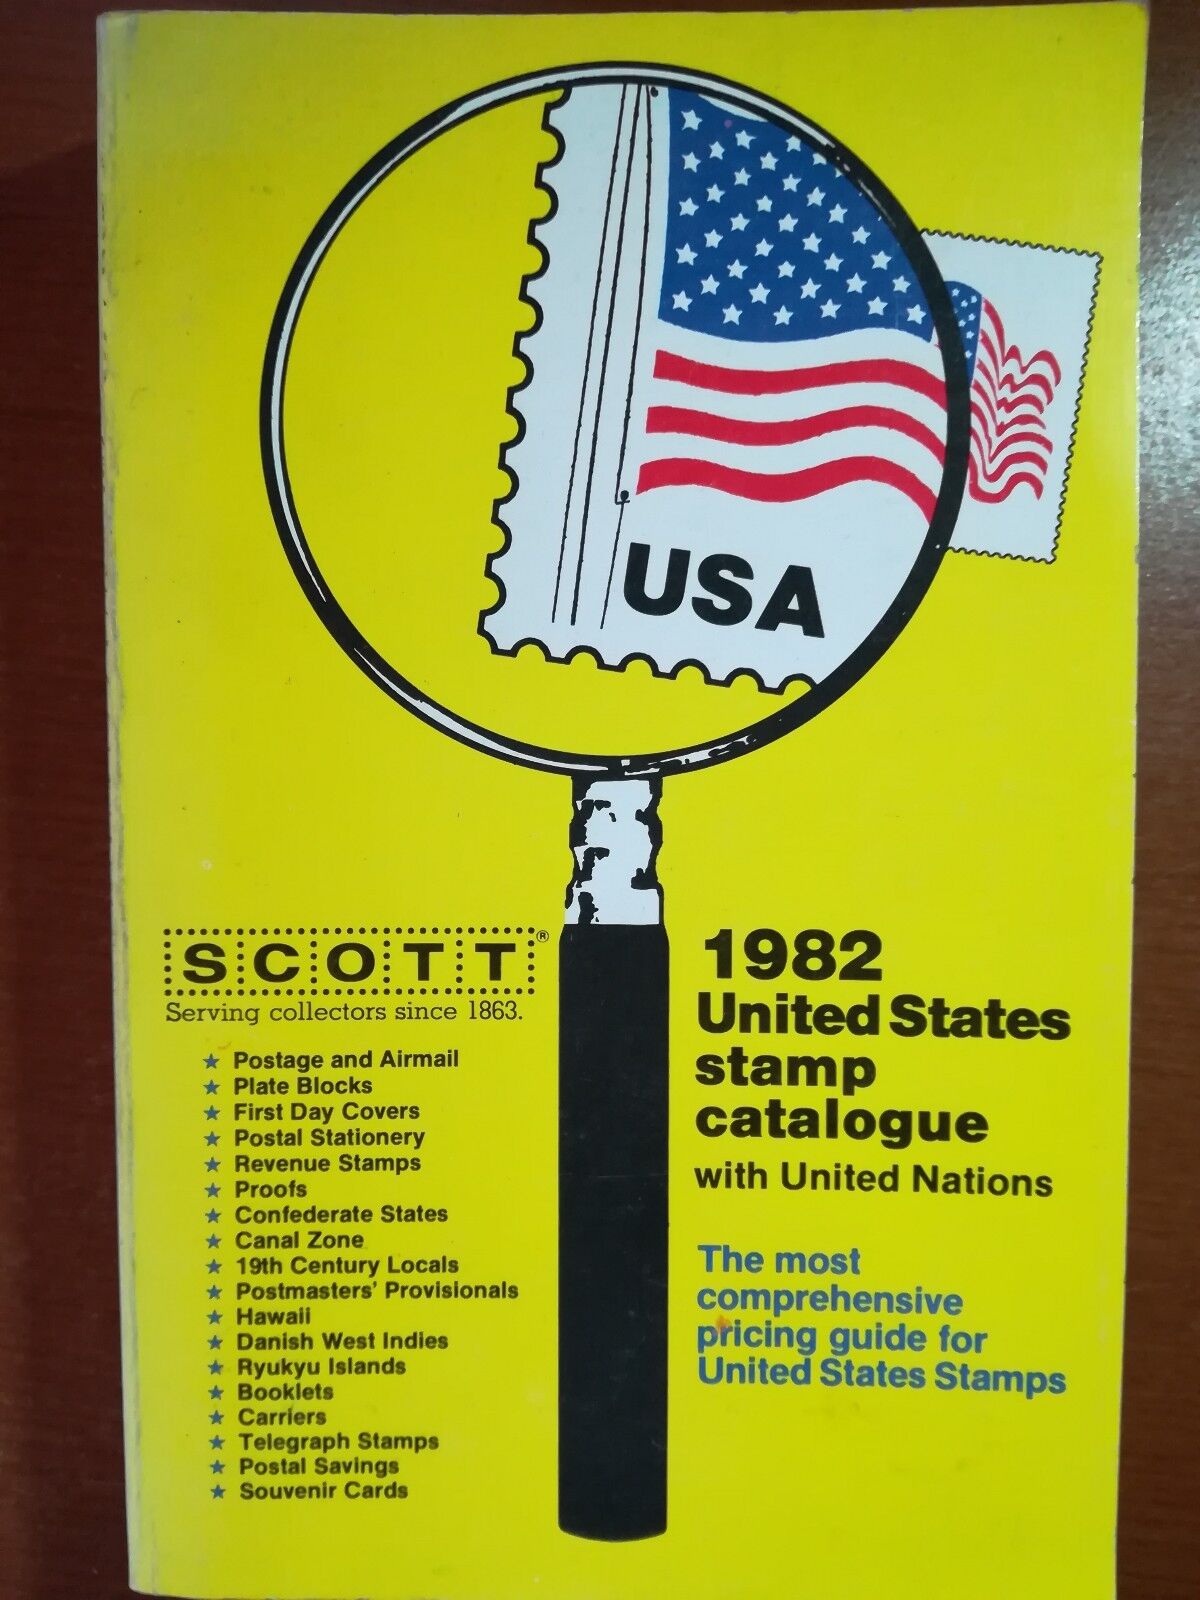 United States Stamp Catalogue - AA.VV. - Scott - 1982 - M